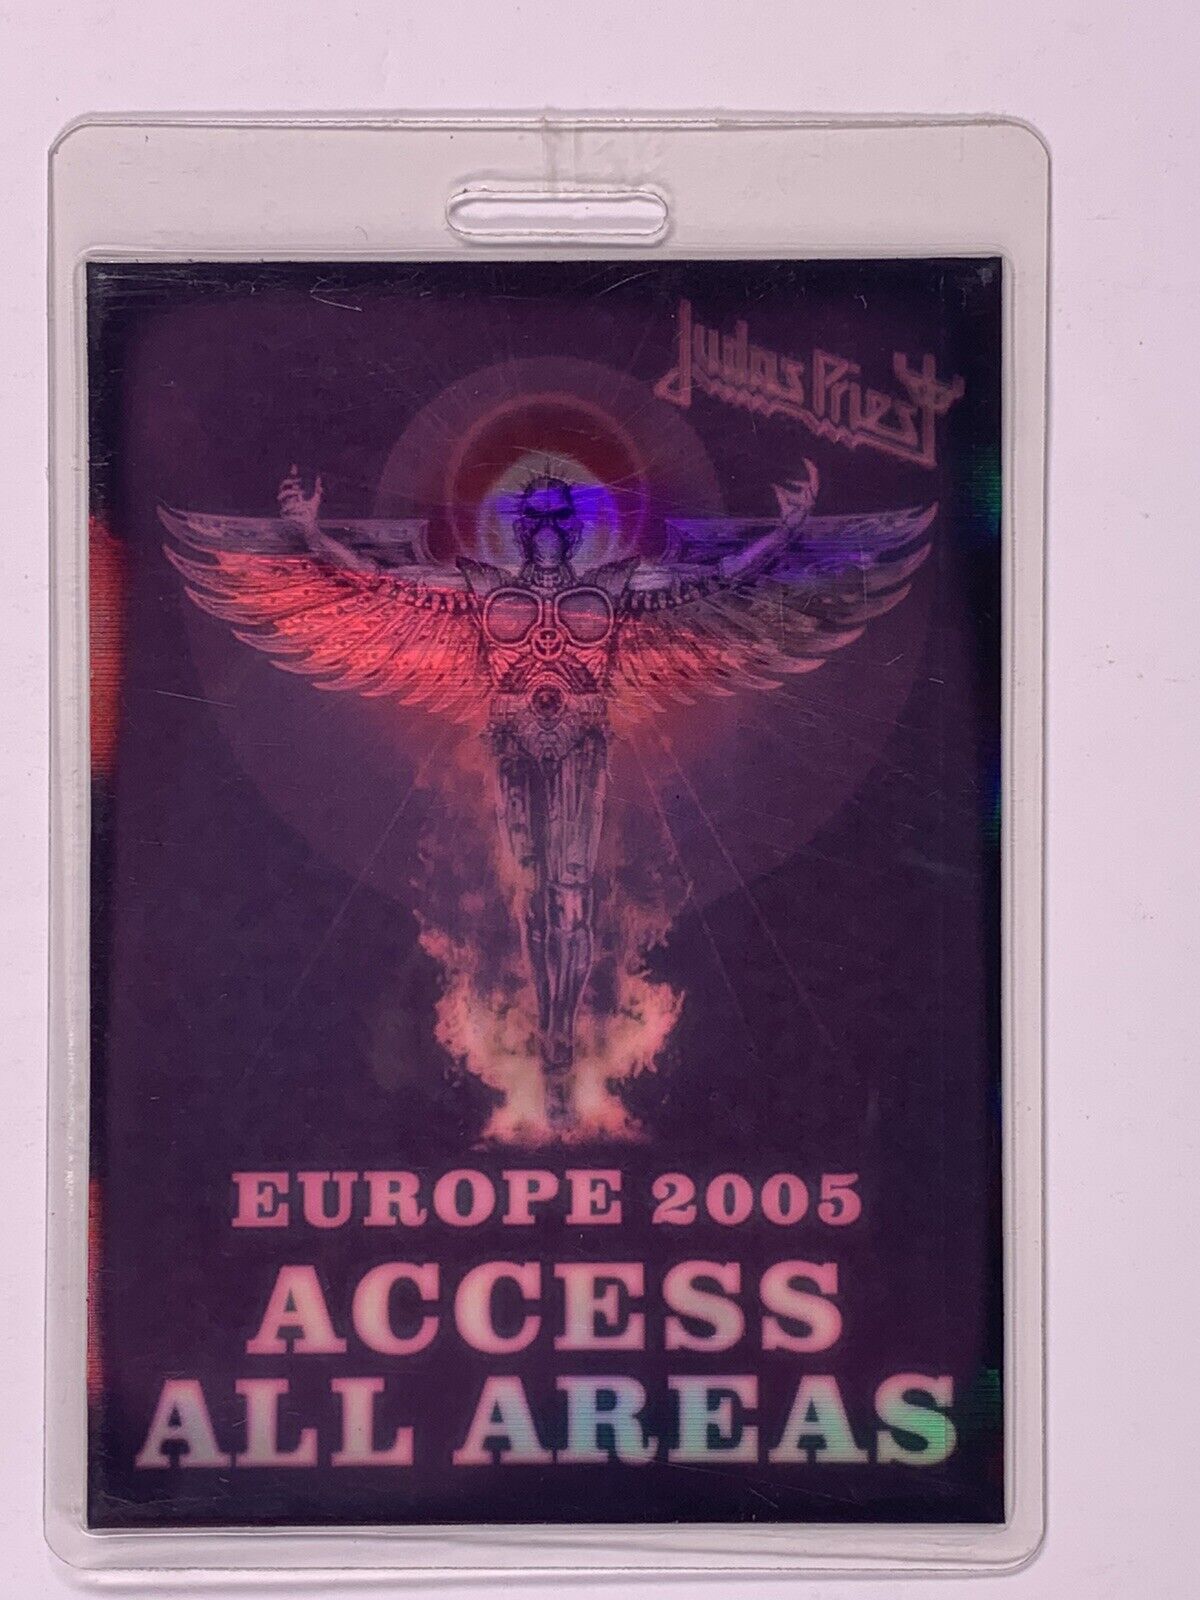 Judas Priest Pass Ticket Original Used Laminate Reunited European Tour 2005